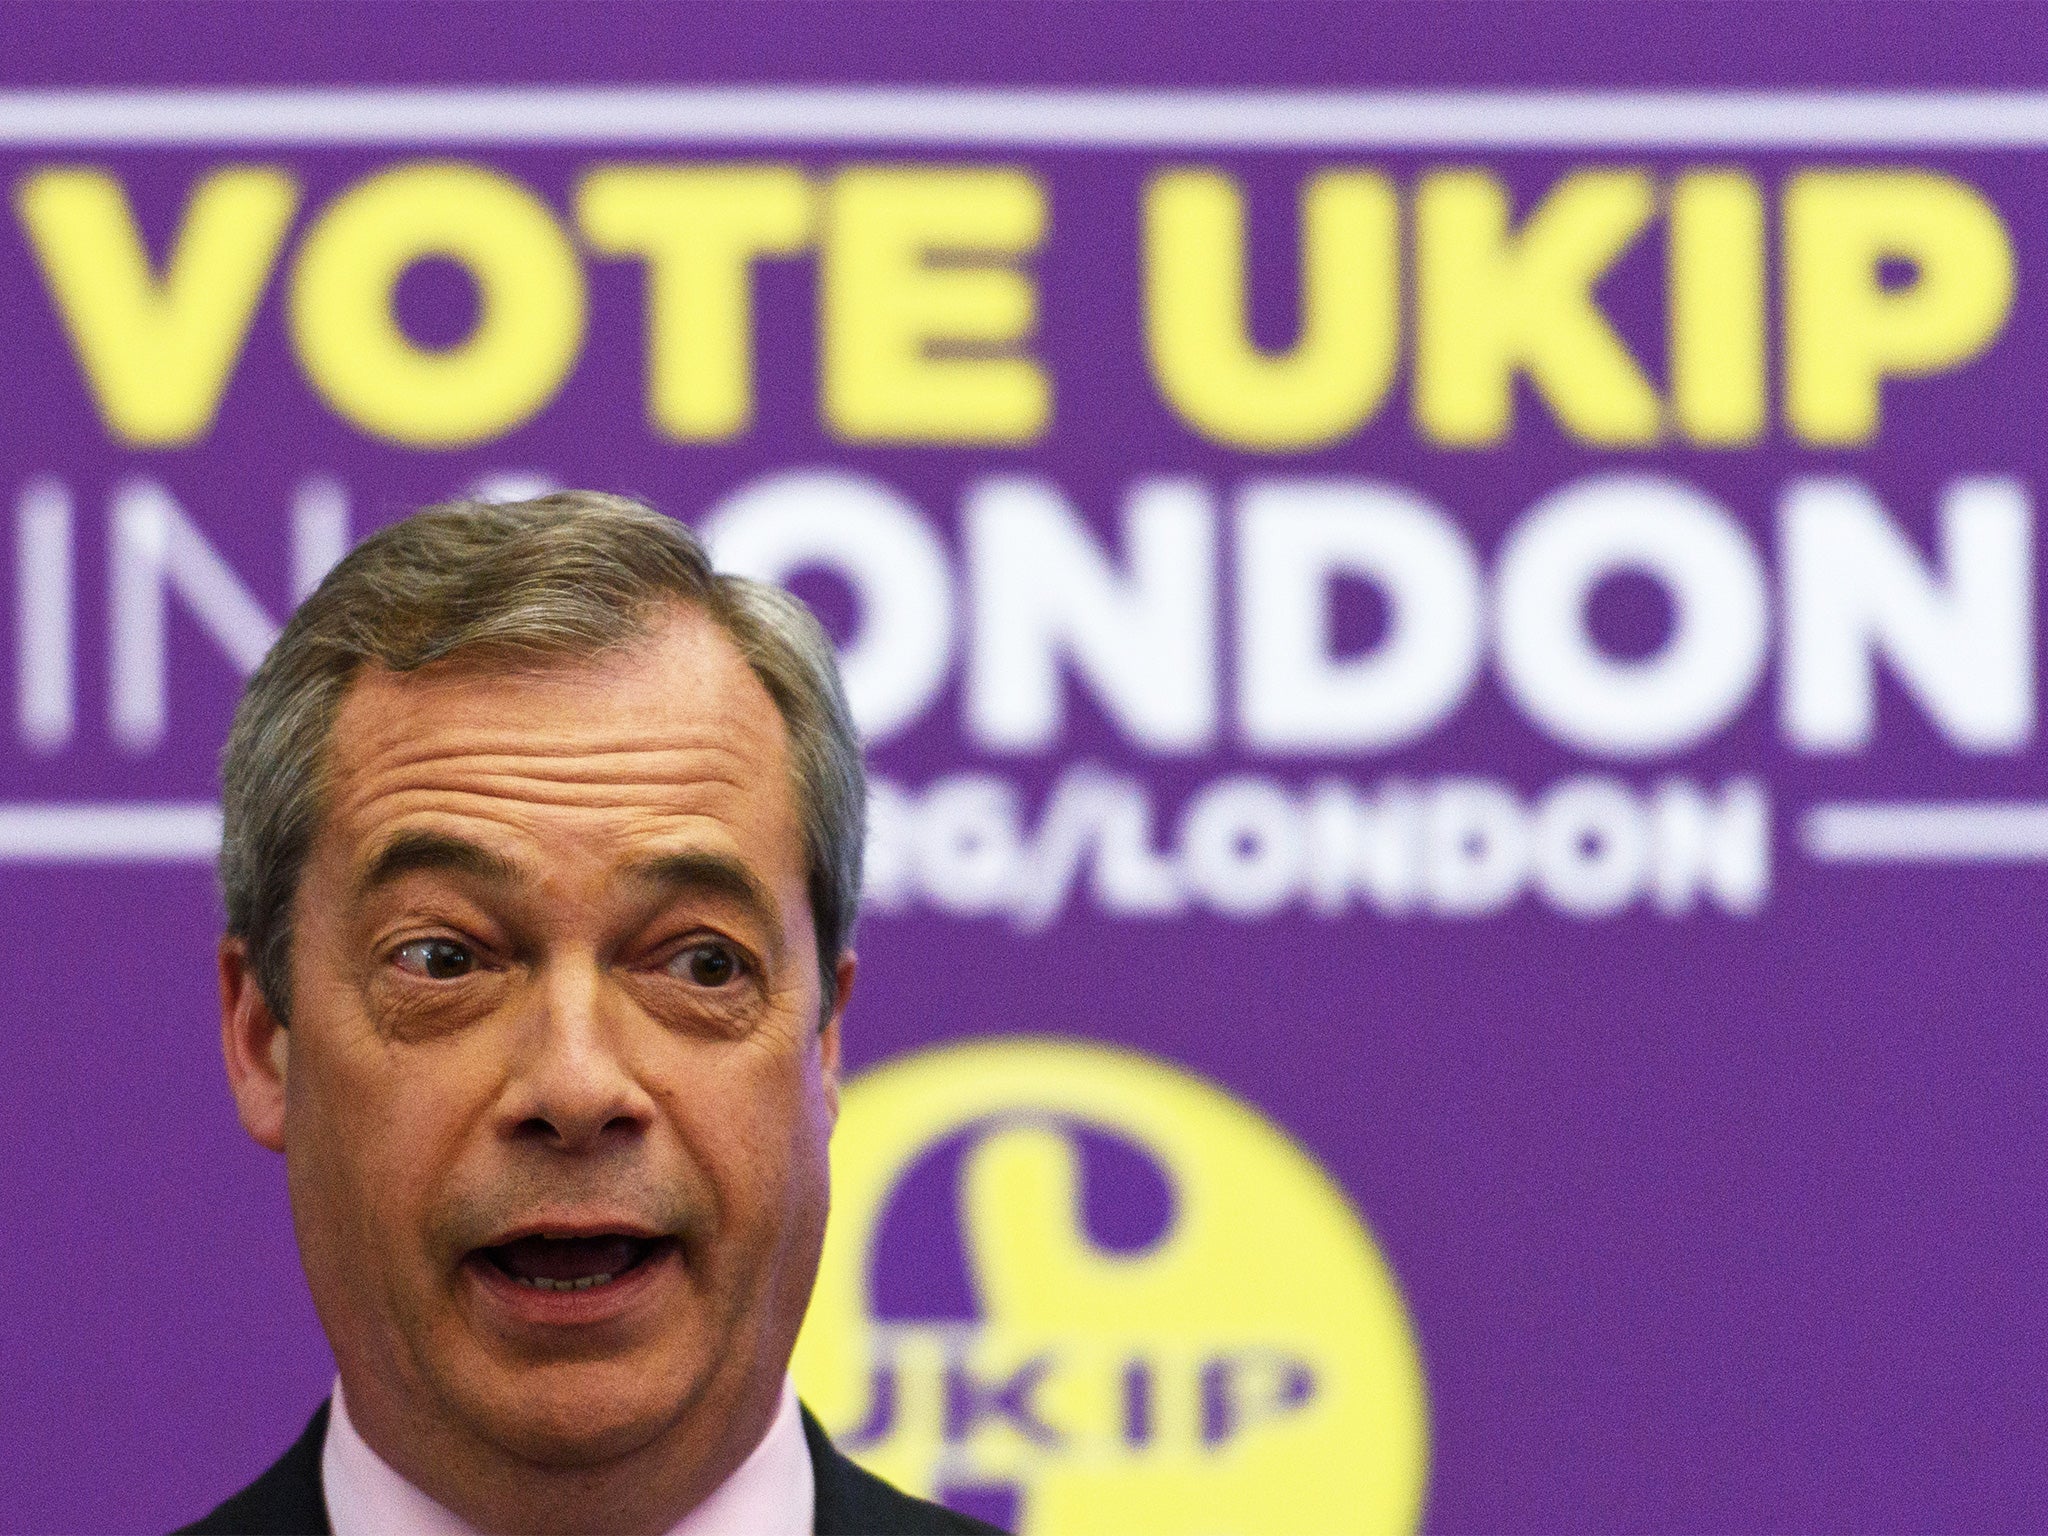 Nigel Farage speaking in support of Ukip's London mayoral candidate earlier this week